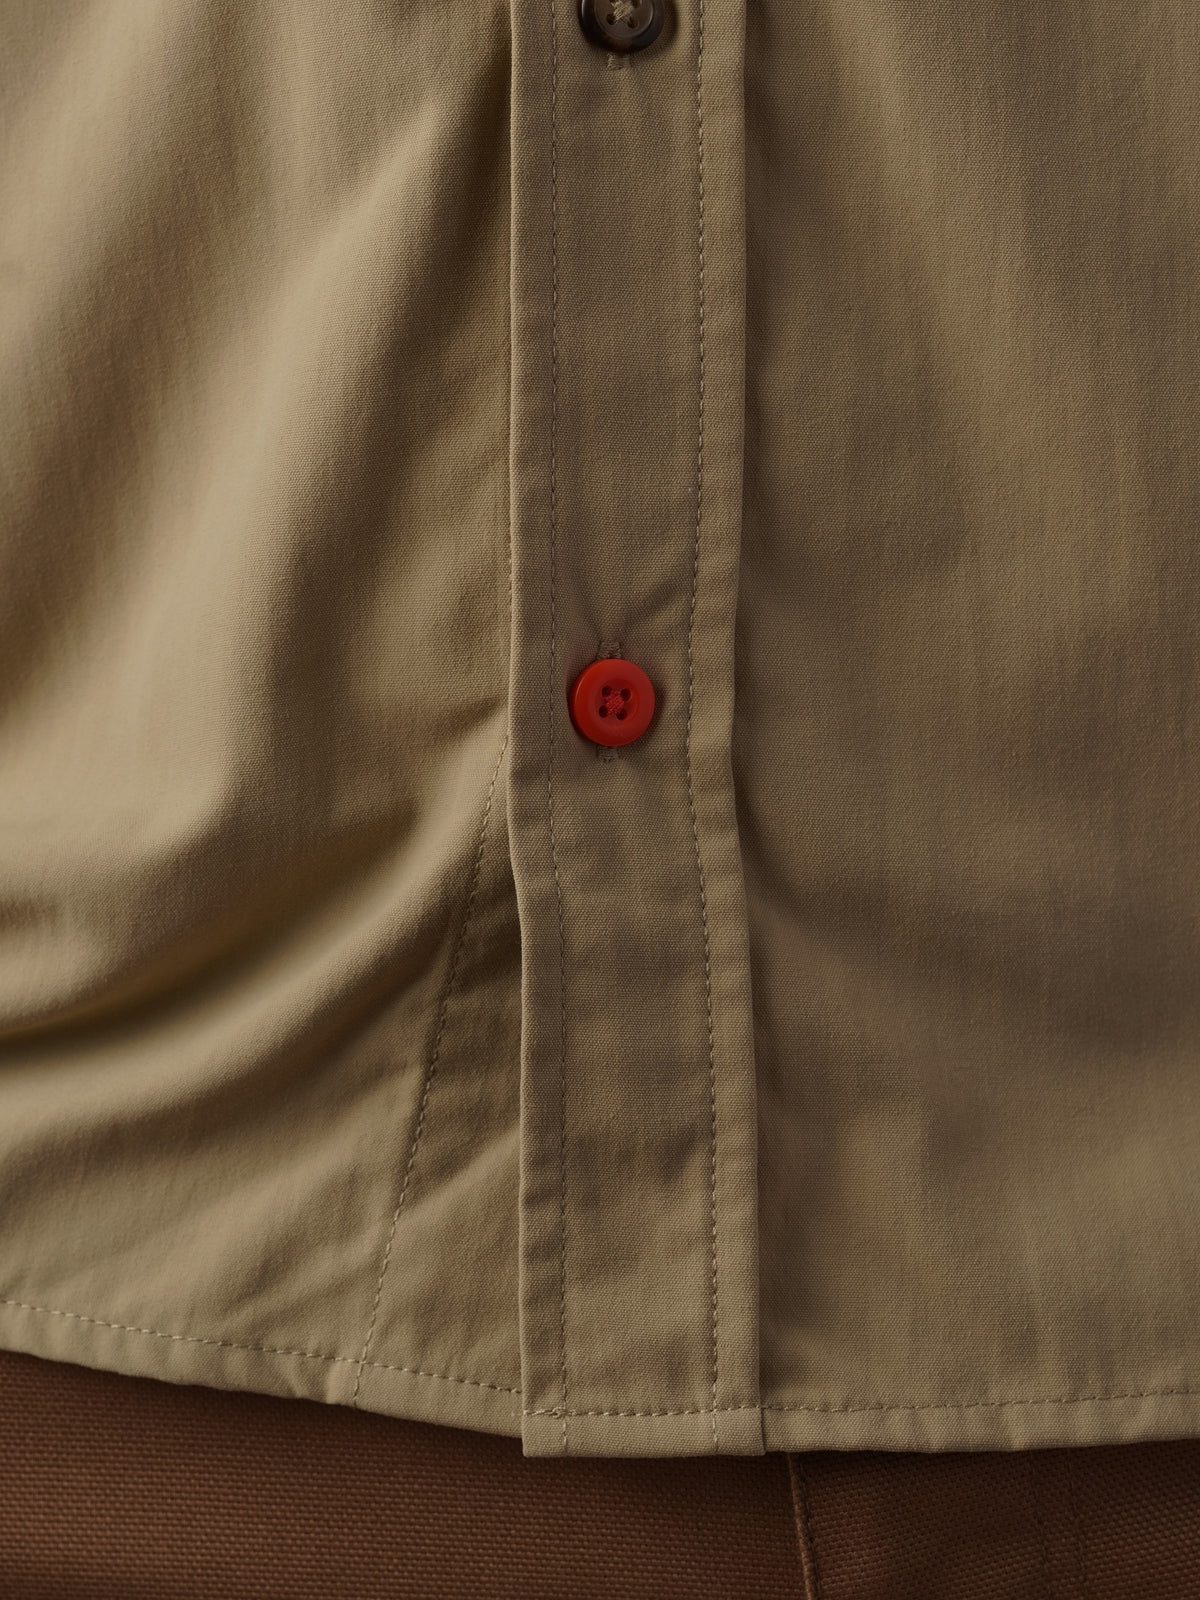 Lightweight Hunting Shirt Short Sleeve - Pumice